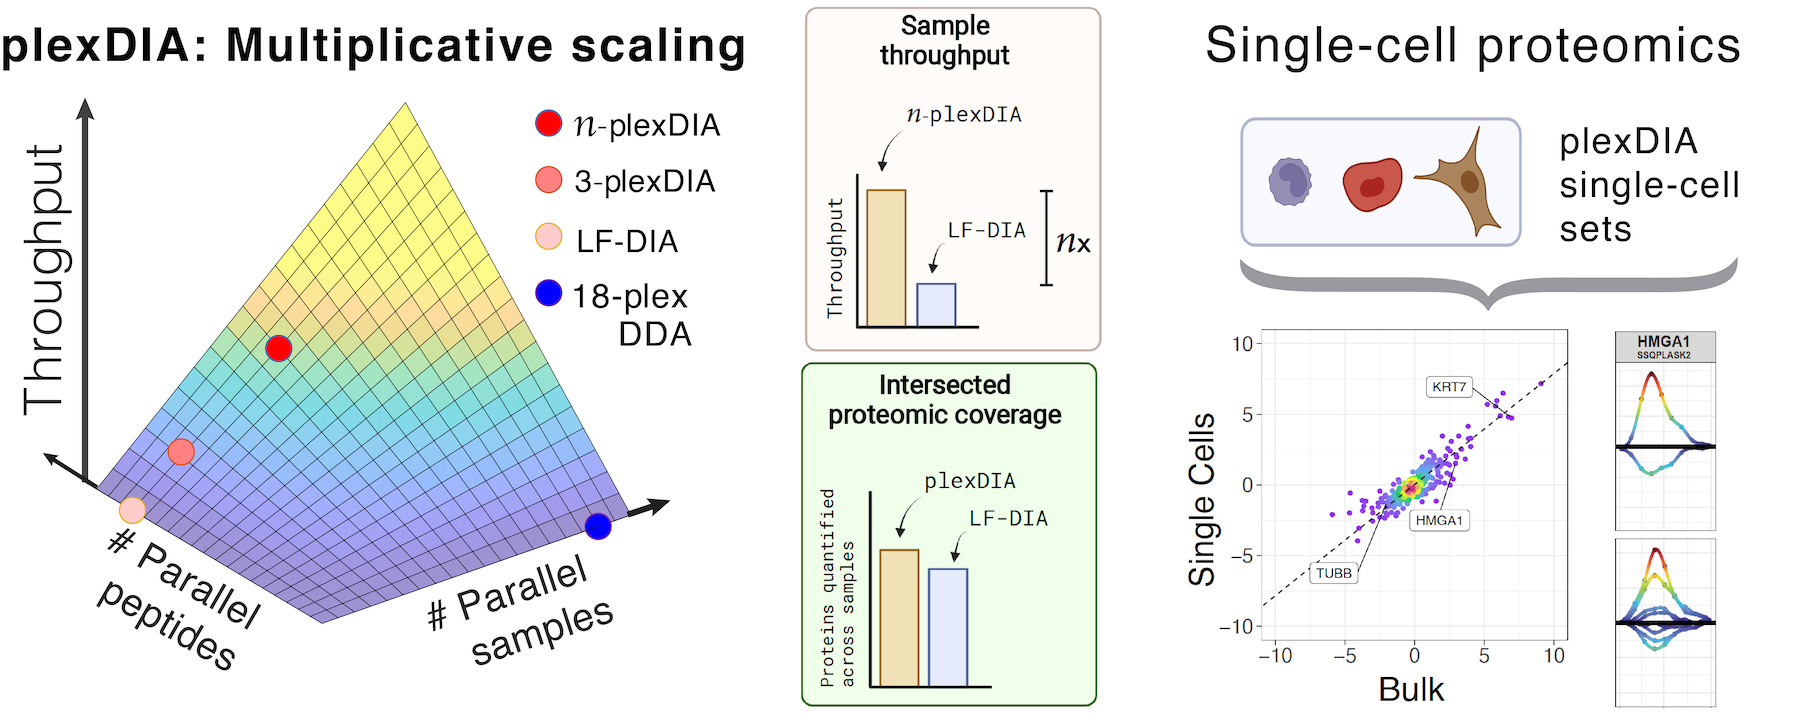 plexDIA: Multiplexed data-independent acquisition for increasing proteomics throughput